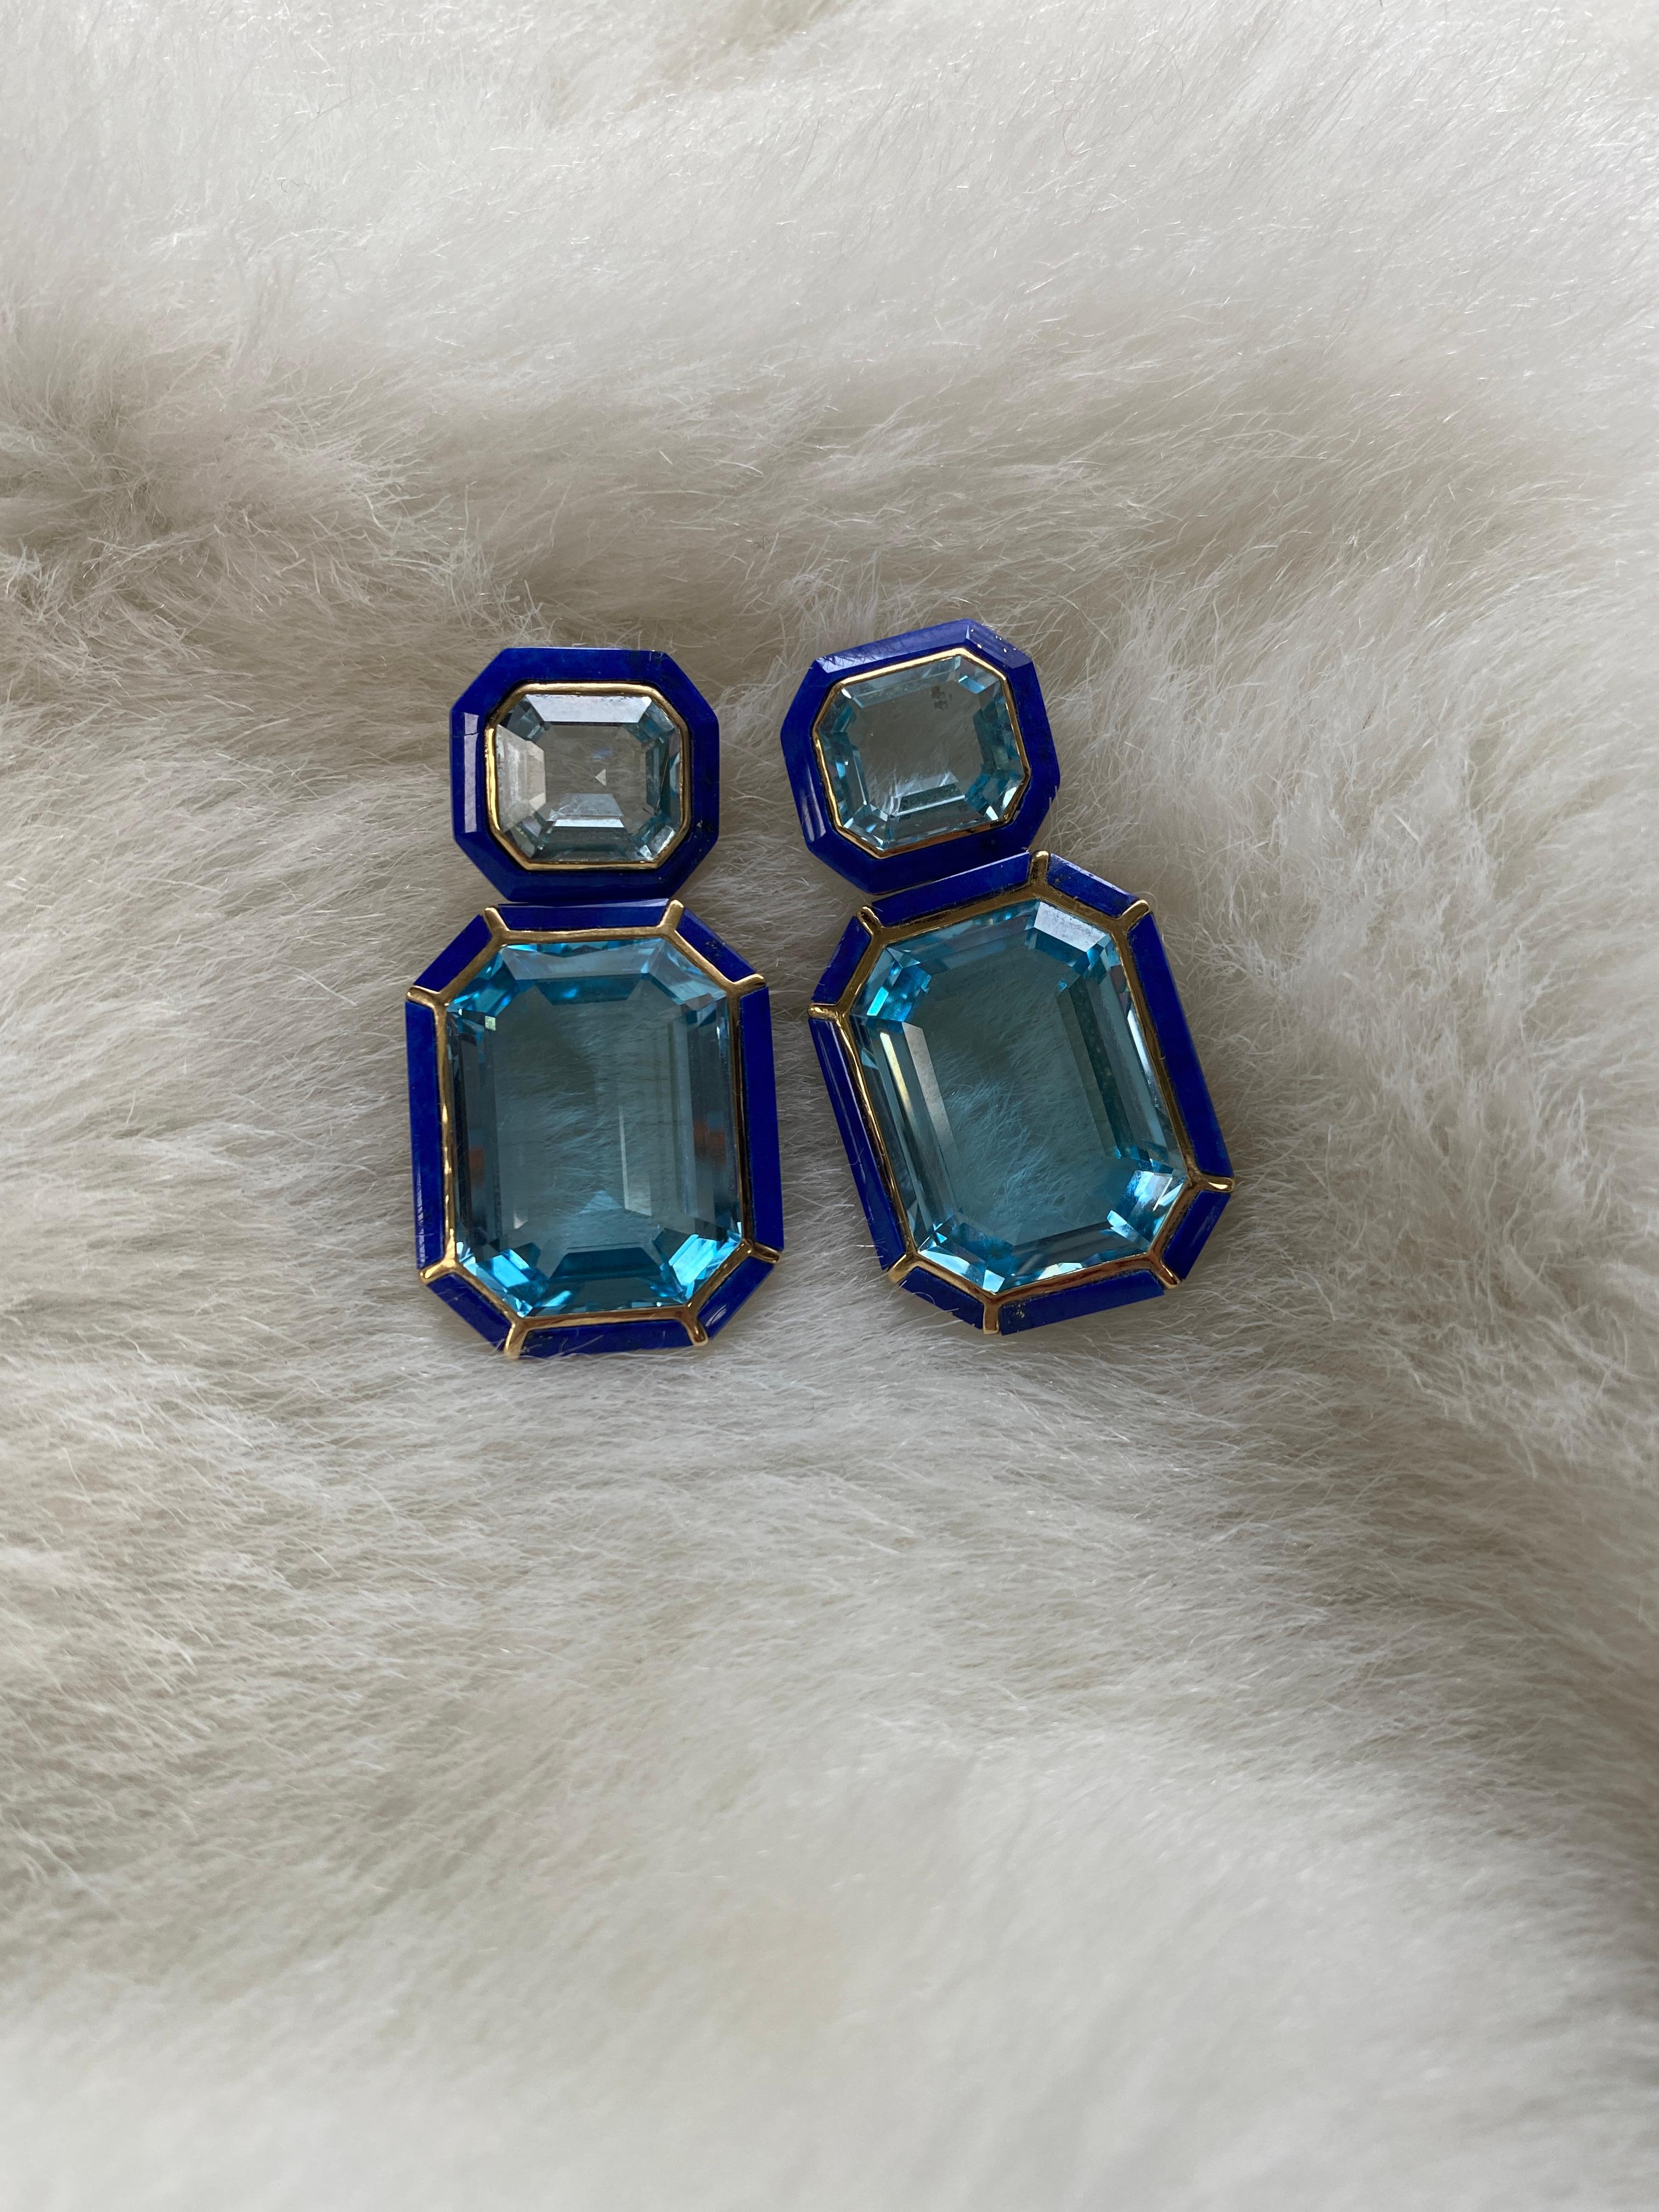 Contemporary Goshwara Blue Topaz and Lapis Lazuli Emerald Cut Earrings For Sale